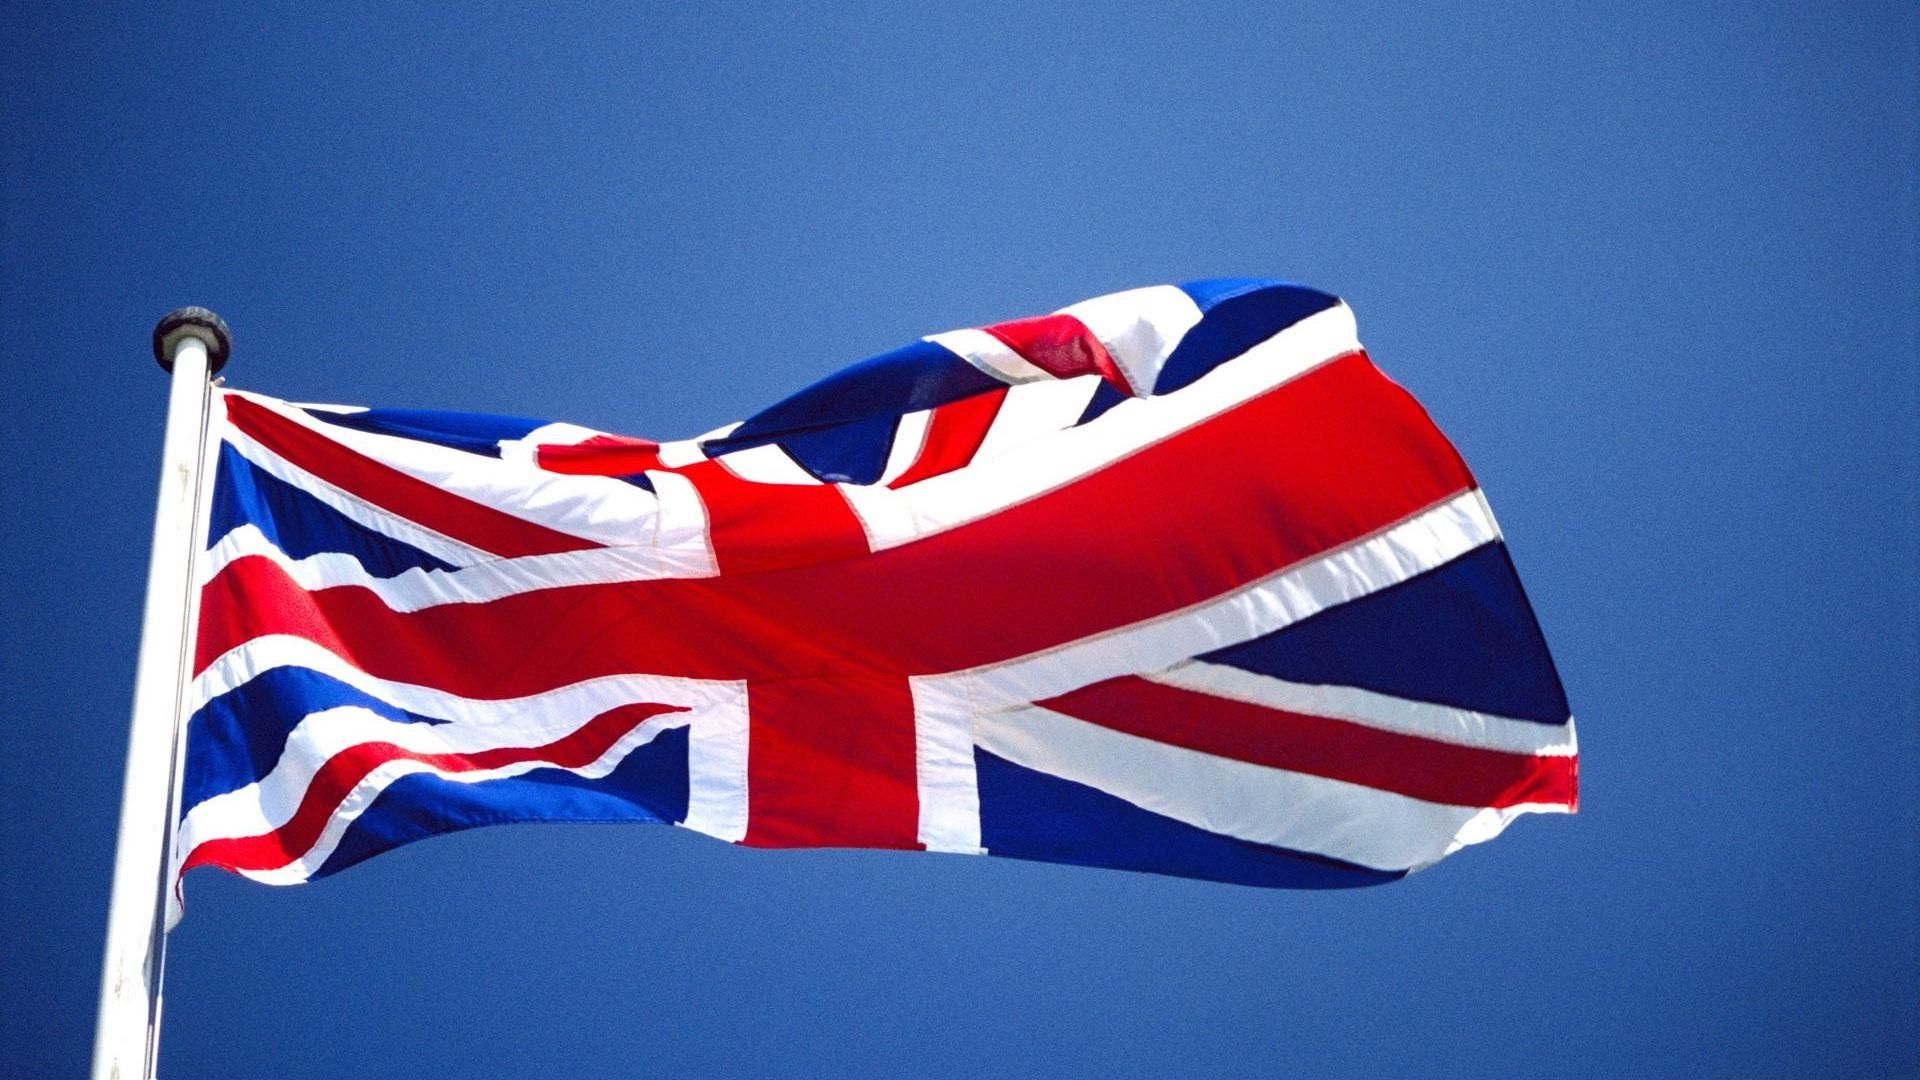 Диван честер британский флаг